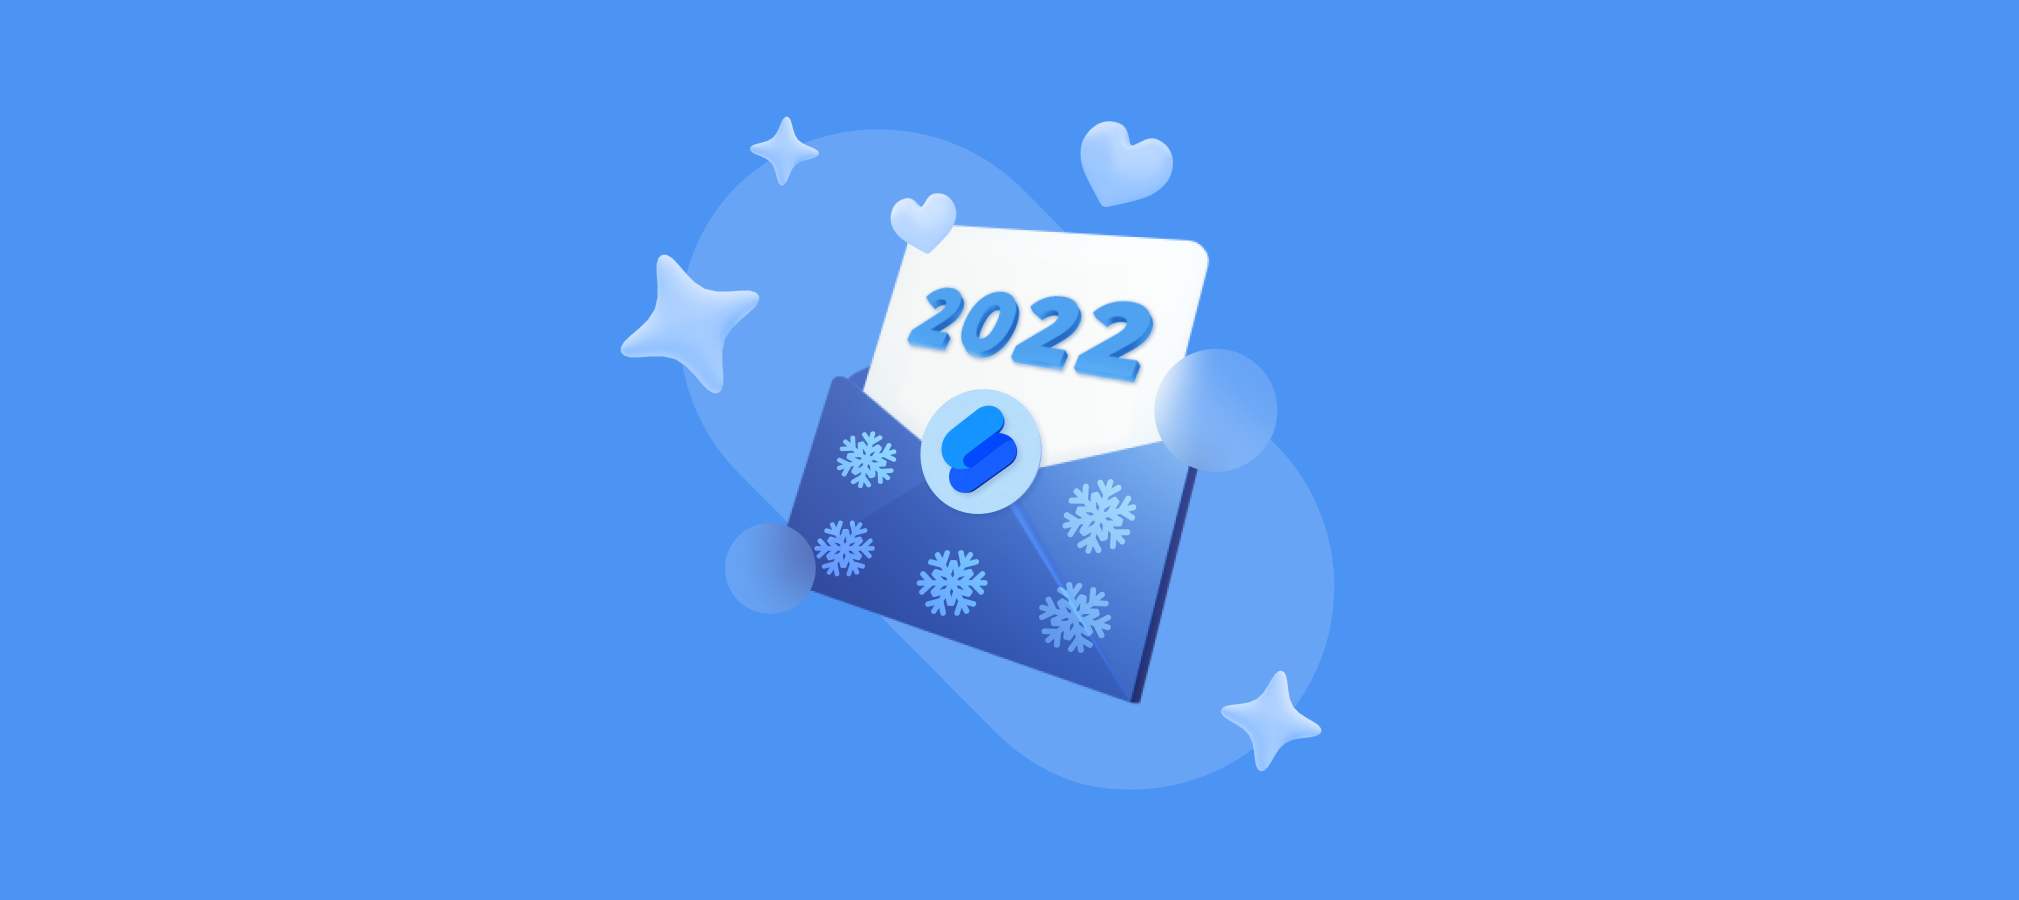 simpleswap-2022